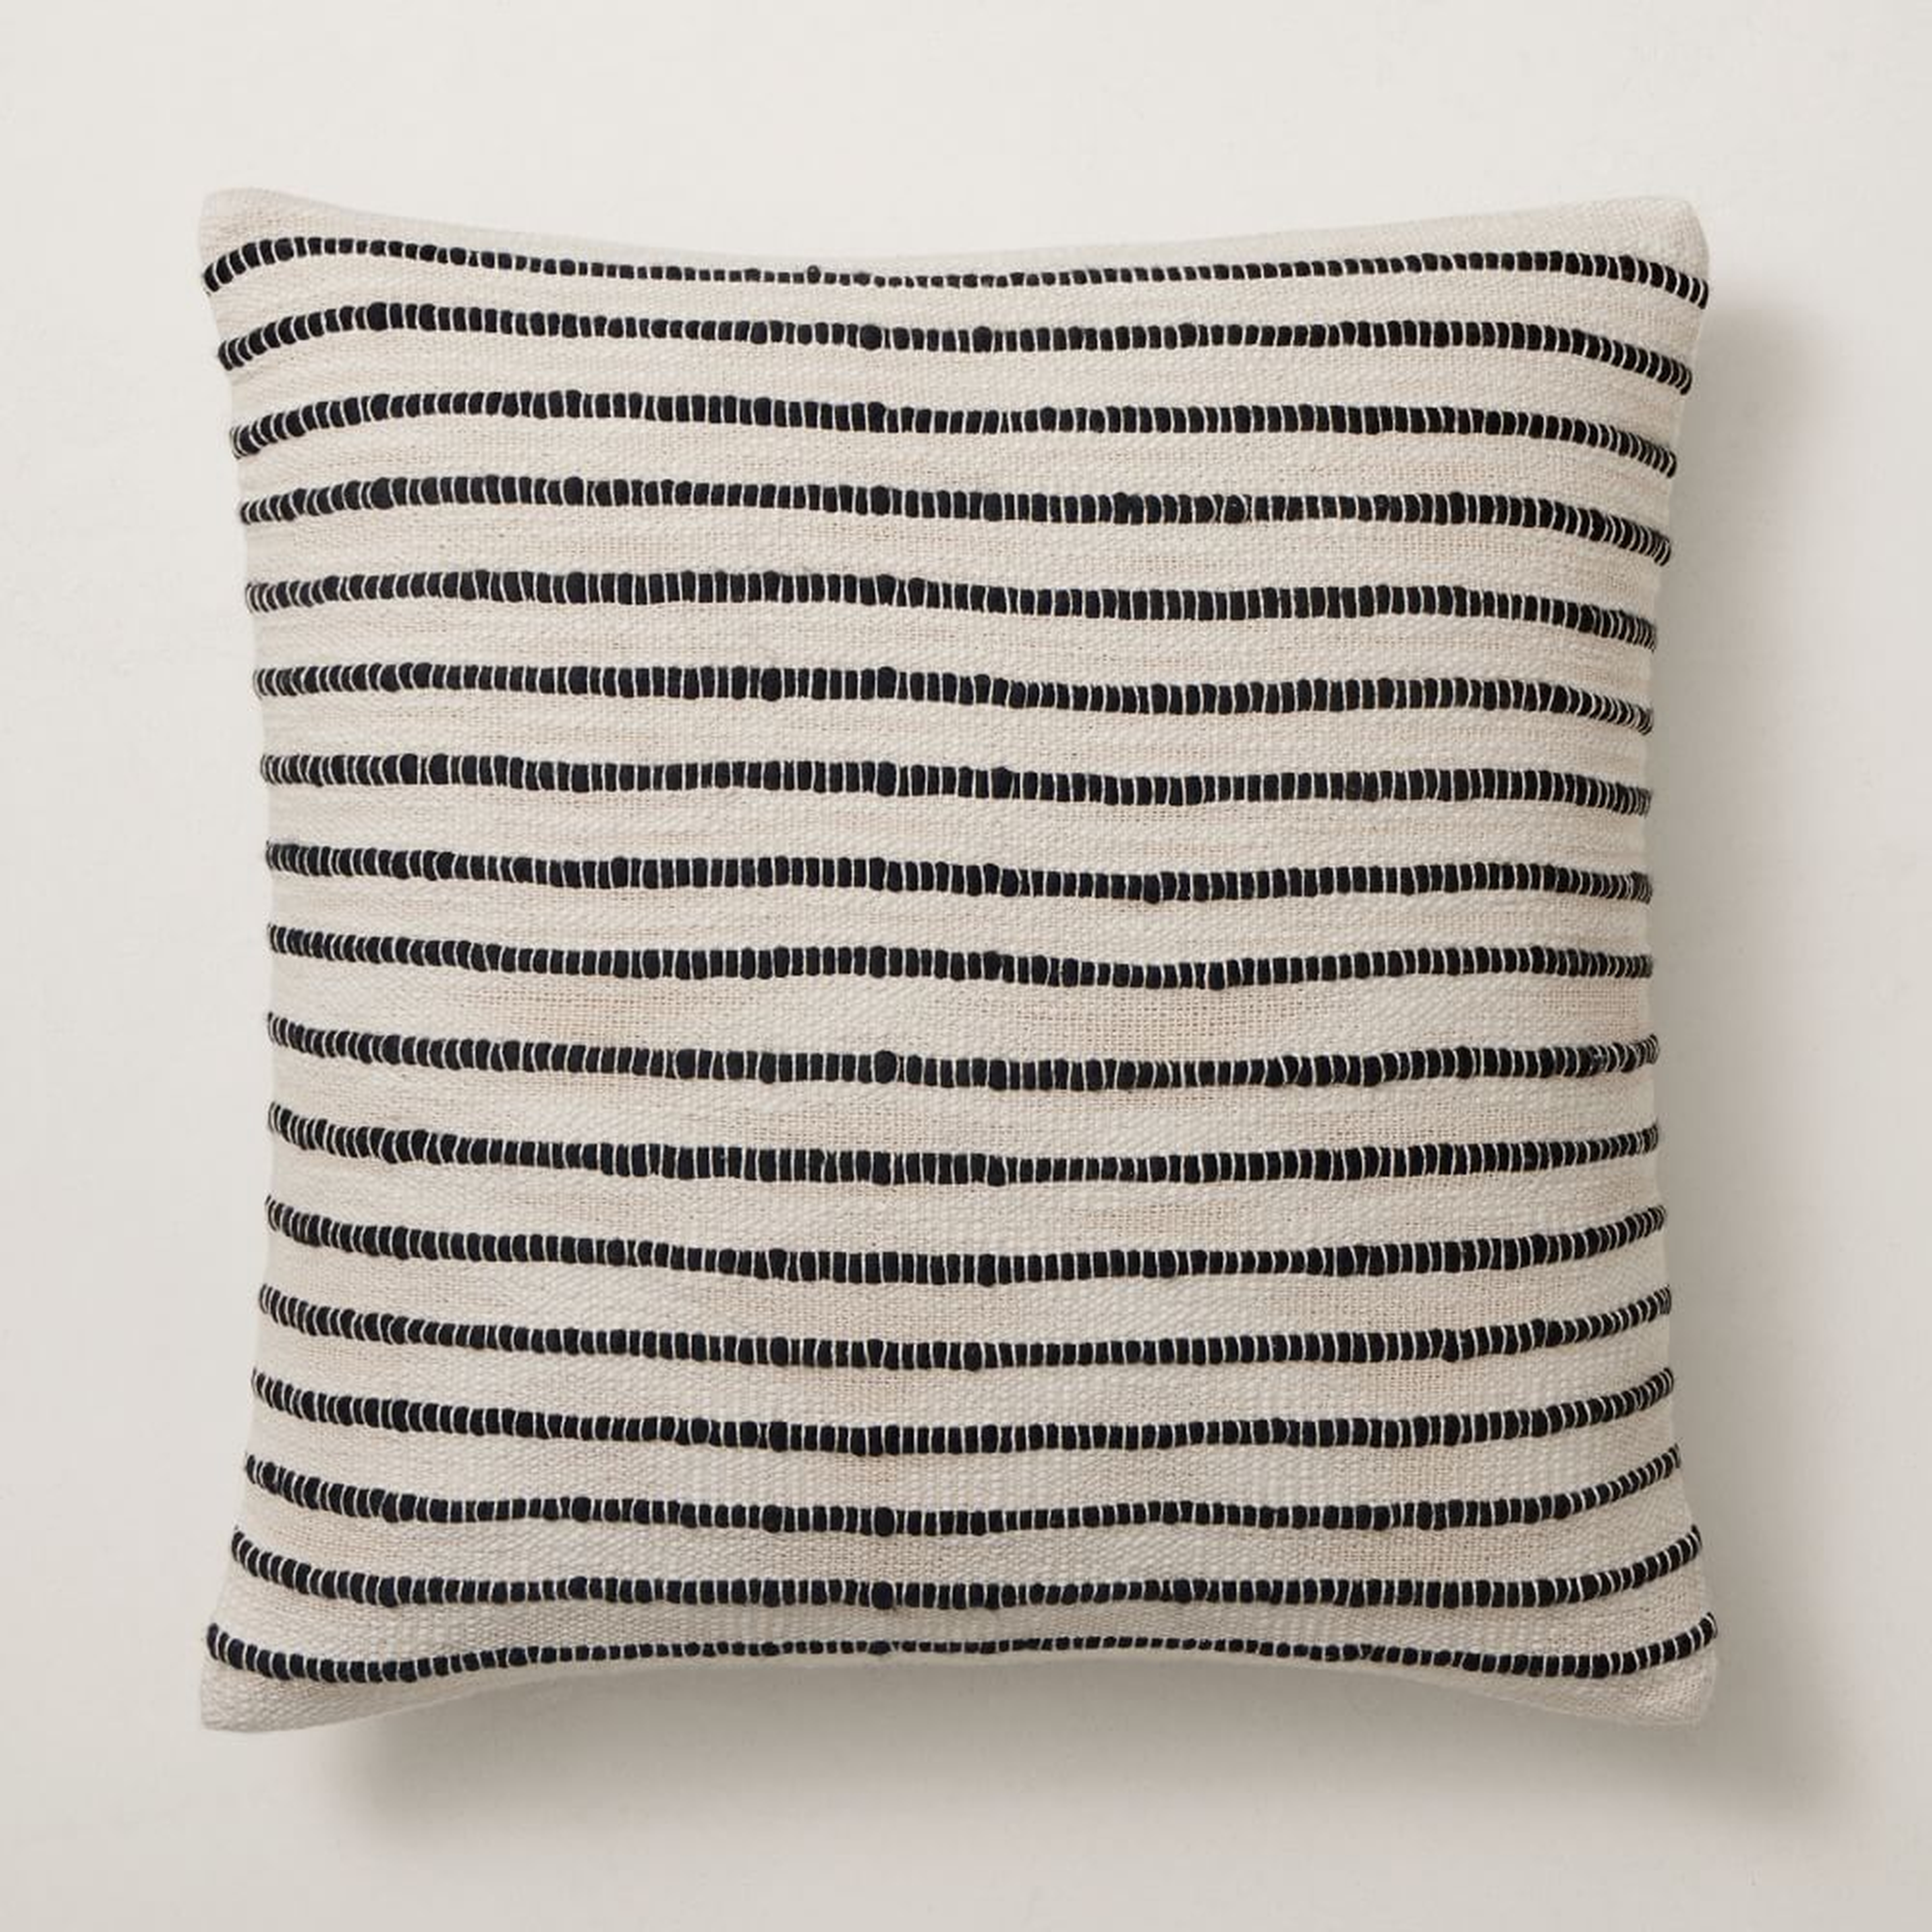 Soft Corded Pillow Cover, 20"x20", Black - West Elm